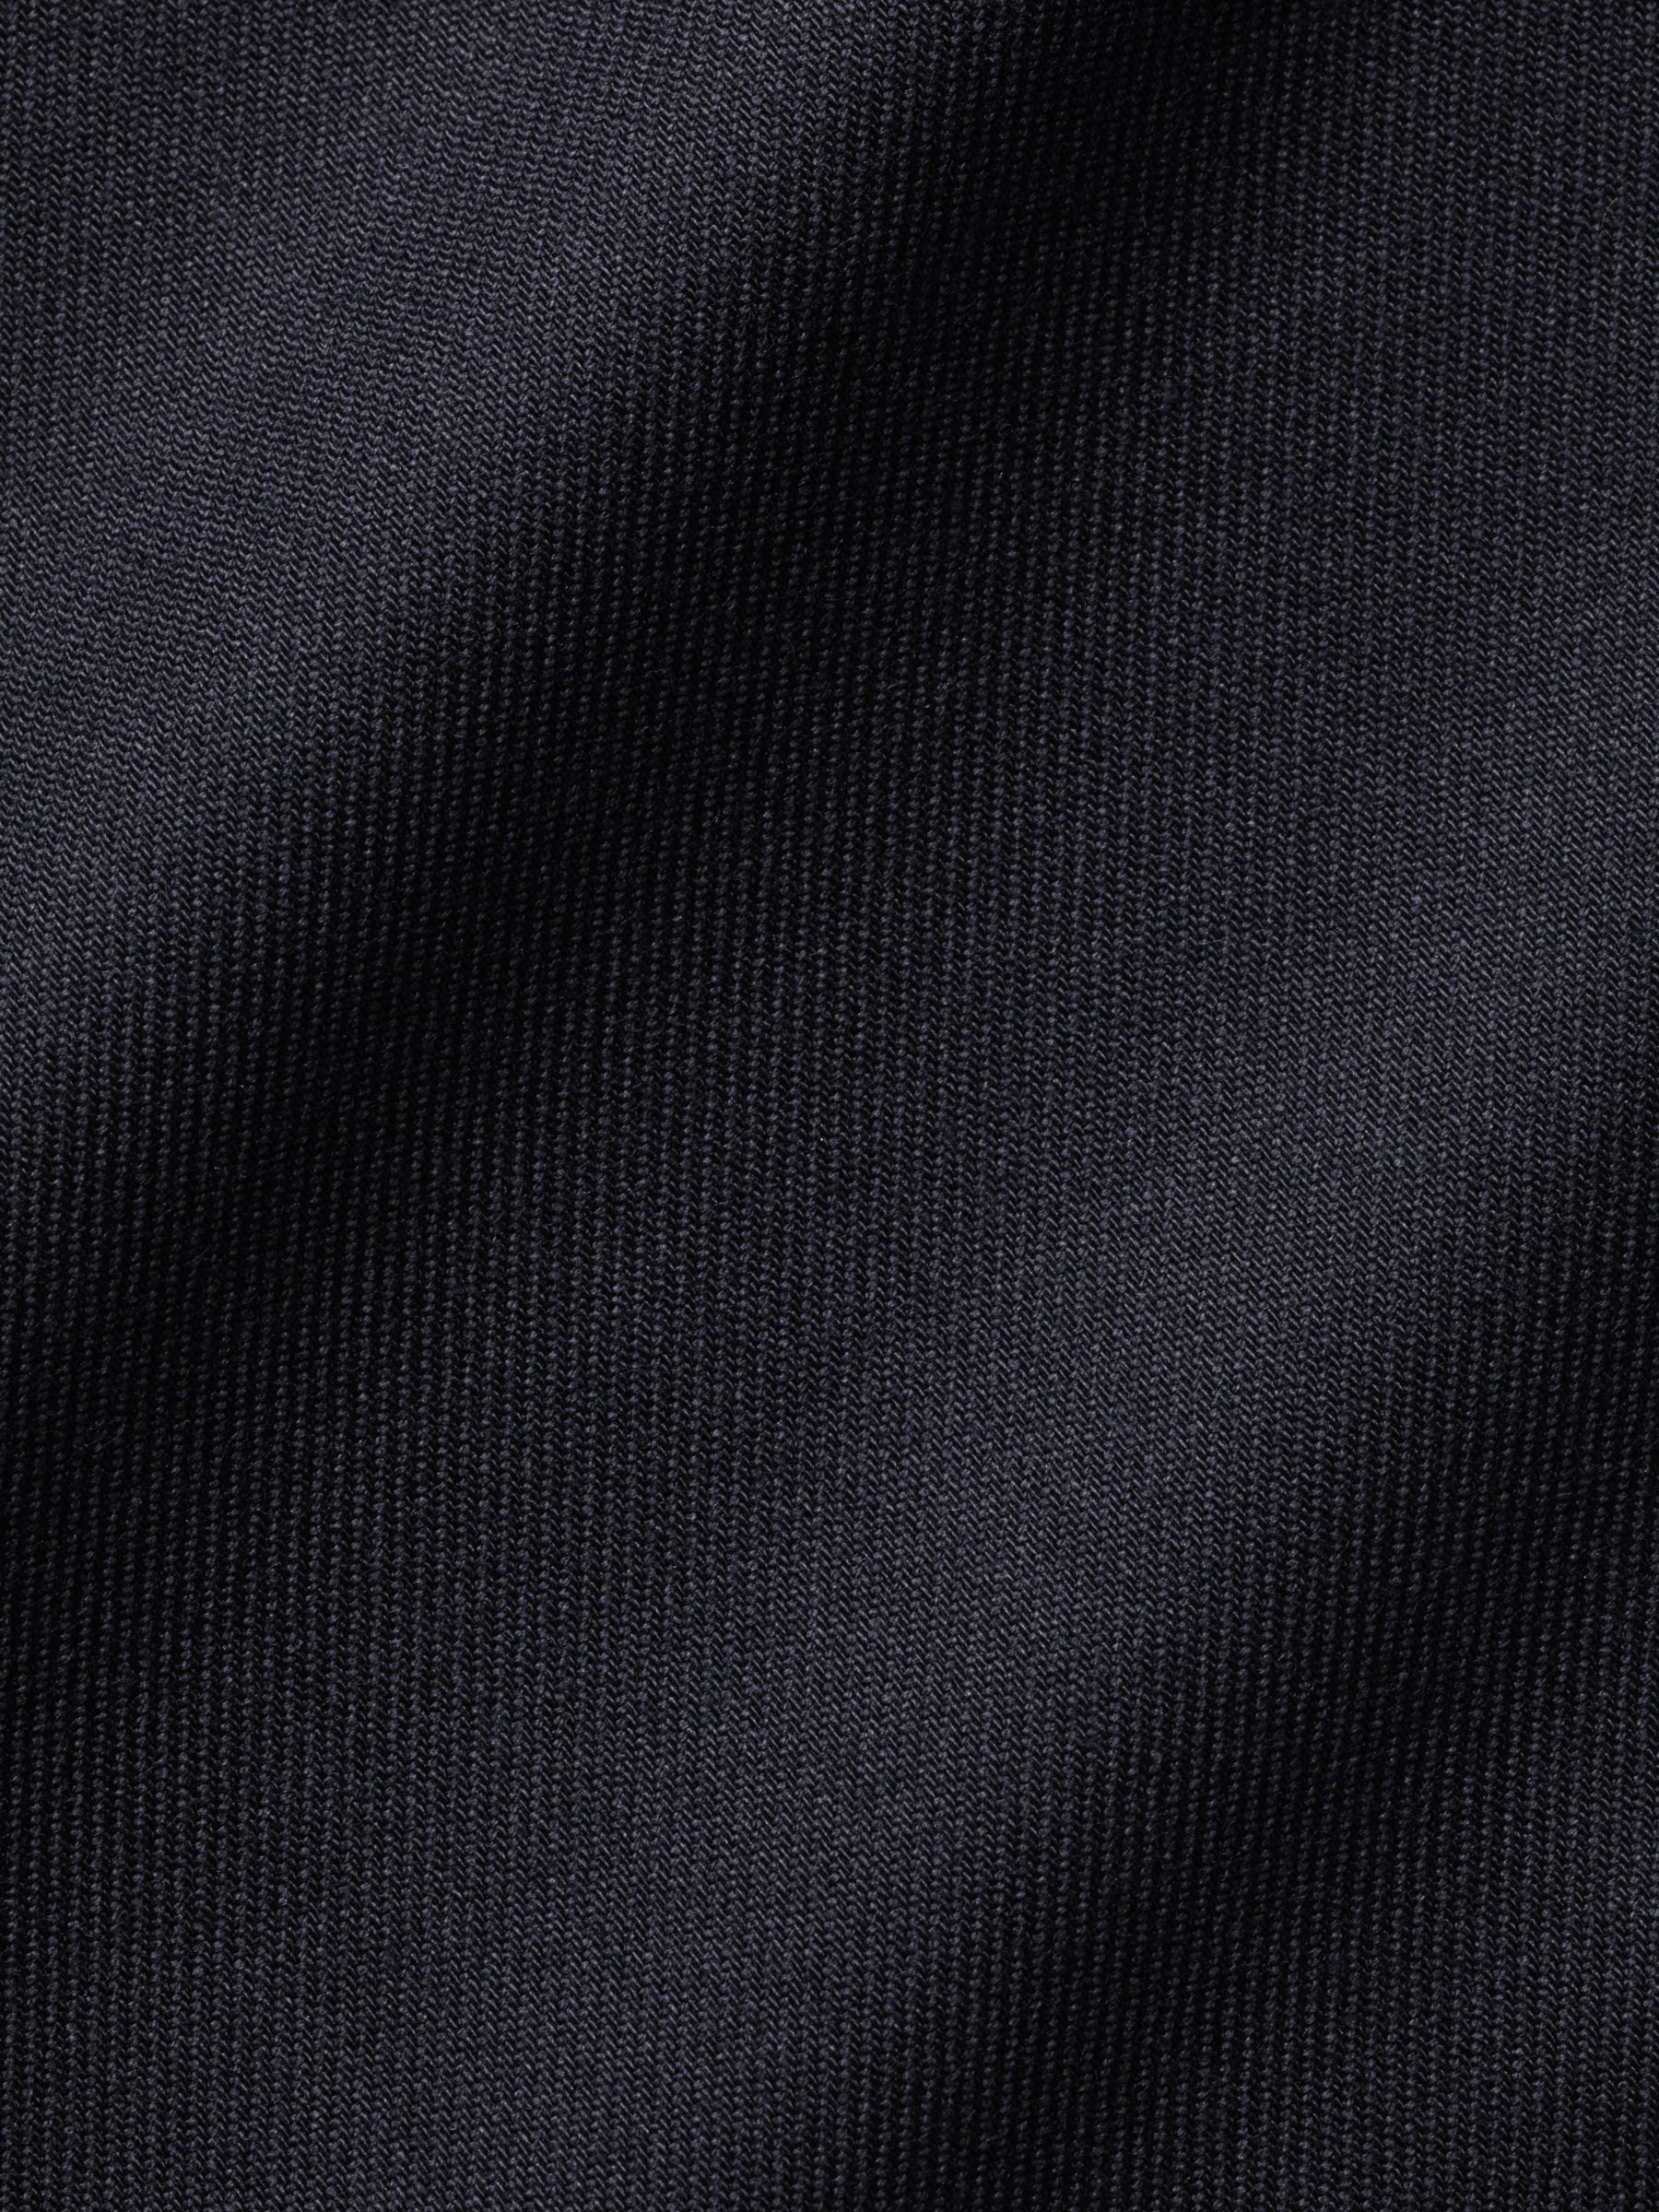 Buy Charles Tyrwhitt Non-Iron Printed Trim Shirt Online at johnlewis.com